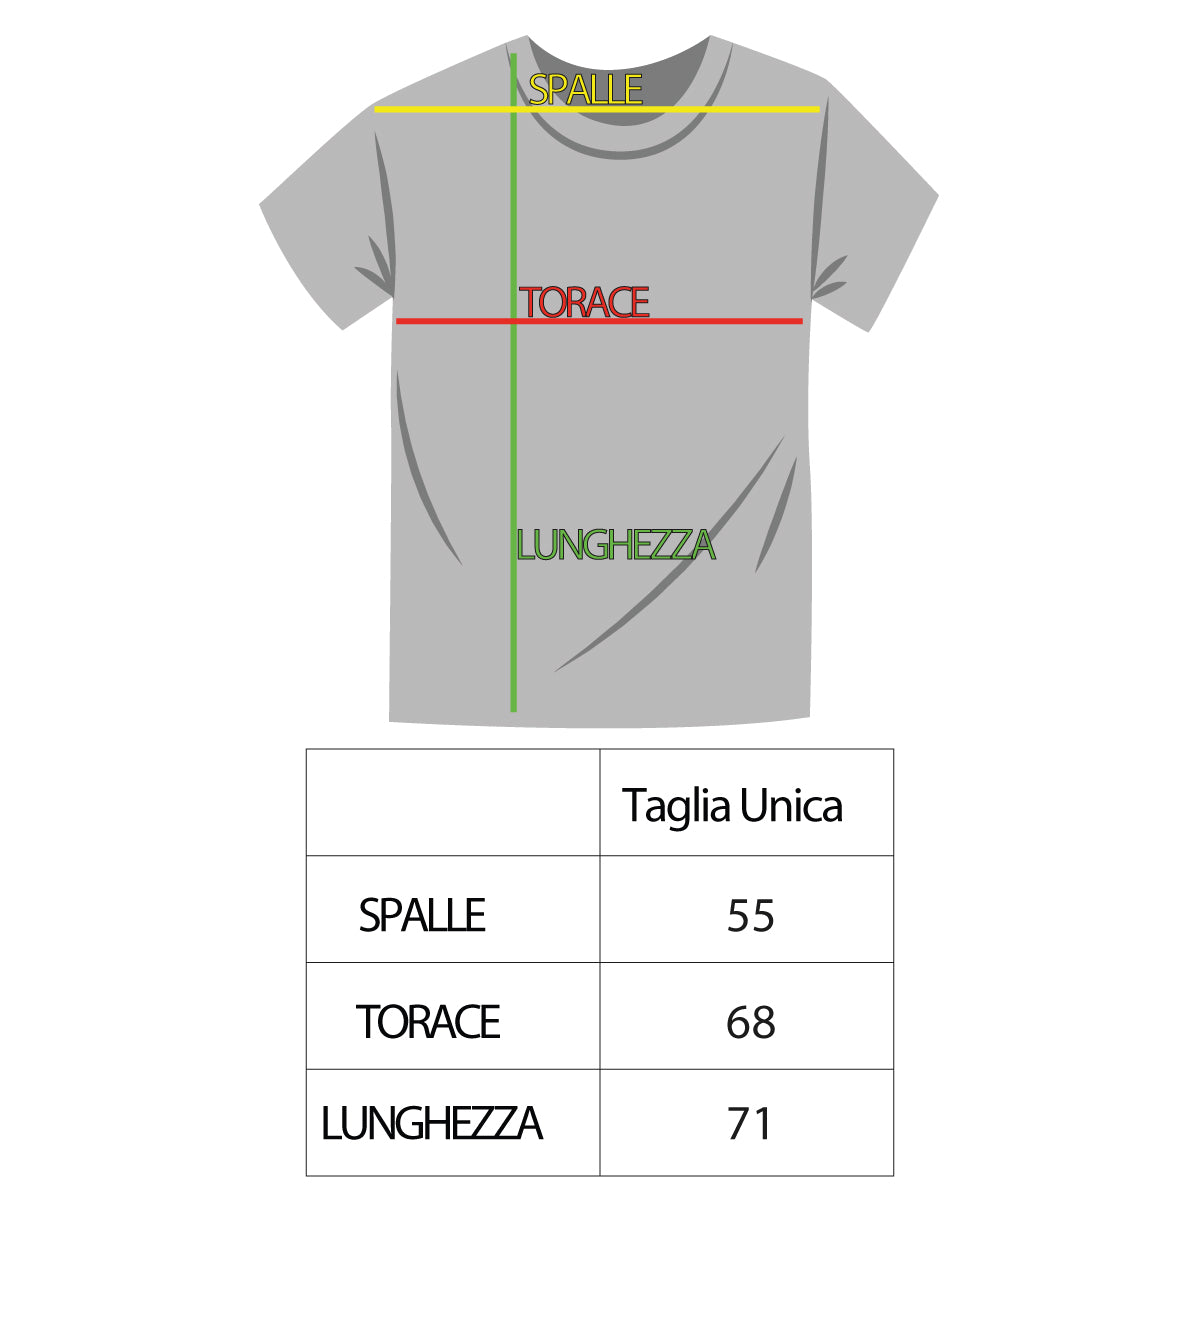 T-shirt Uomo Tinta Unita Over Salmone Girocollo Cotone GIOSAL